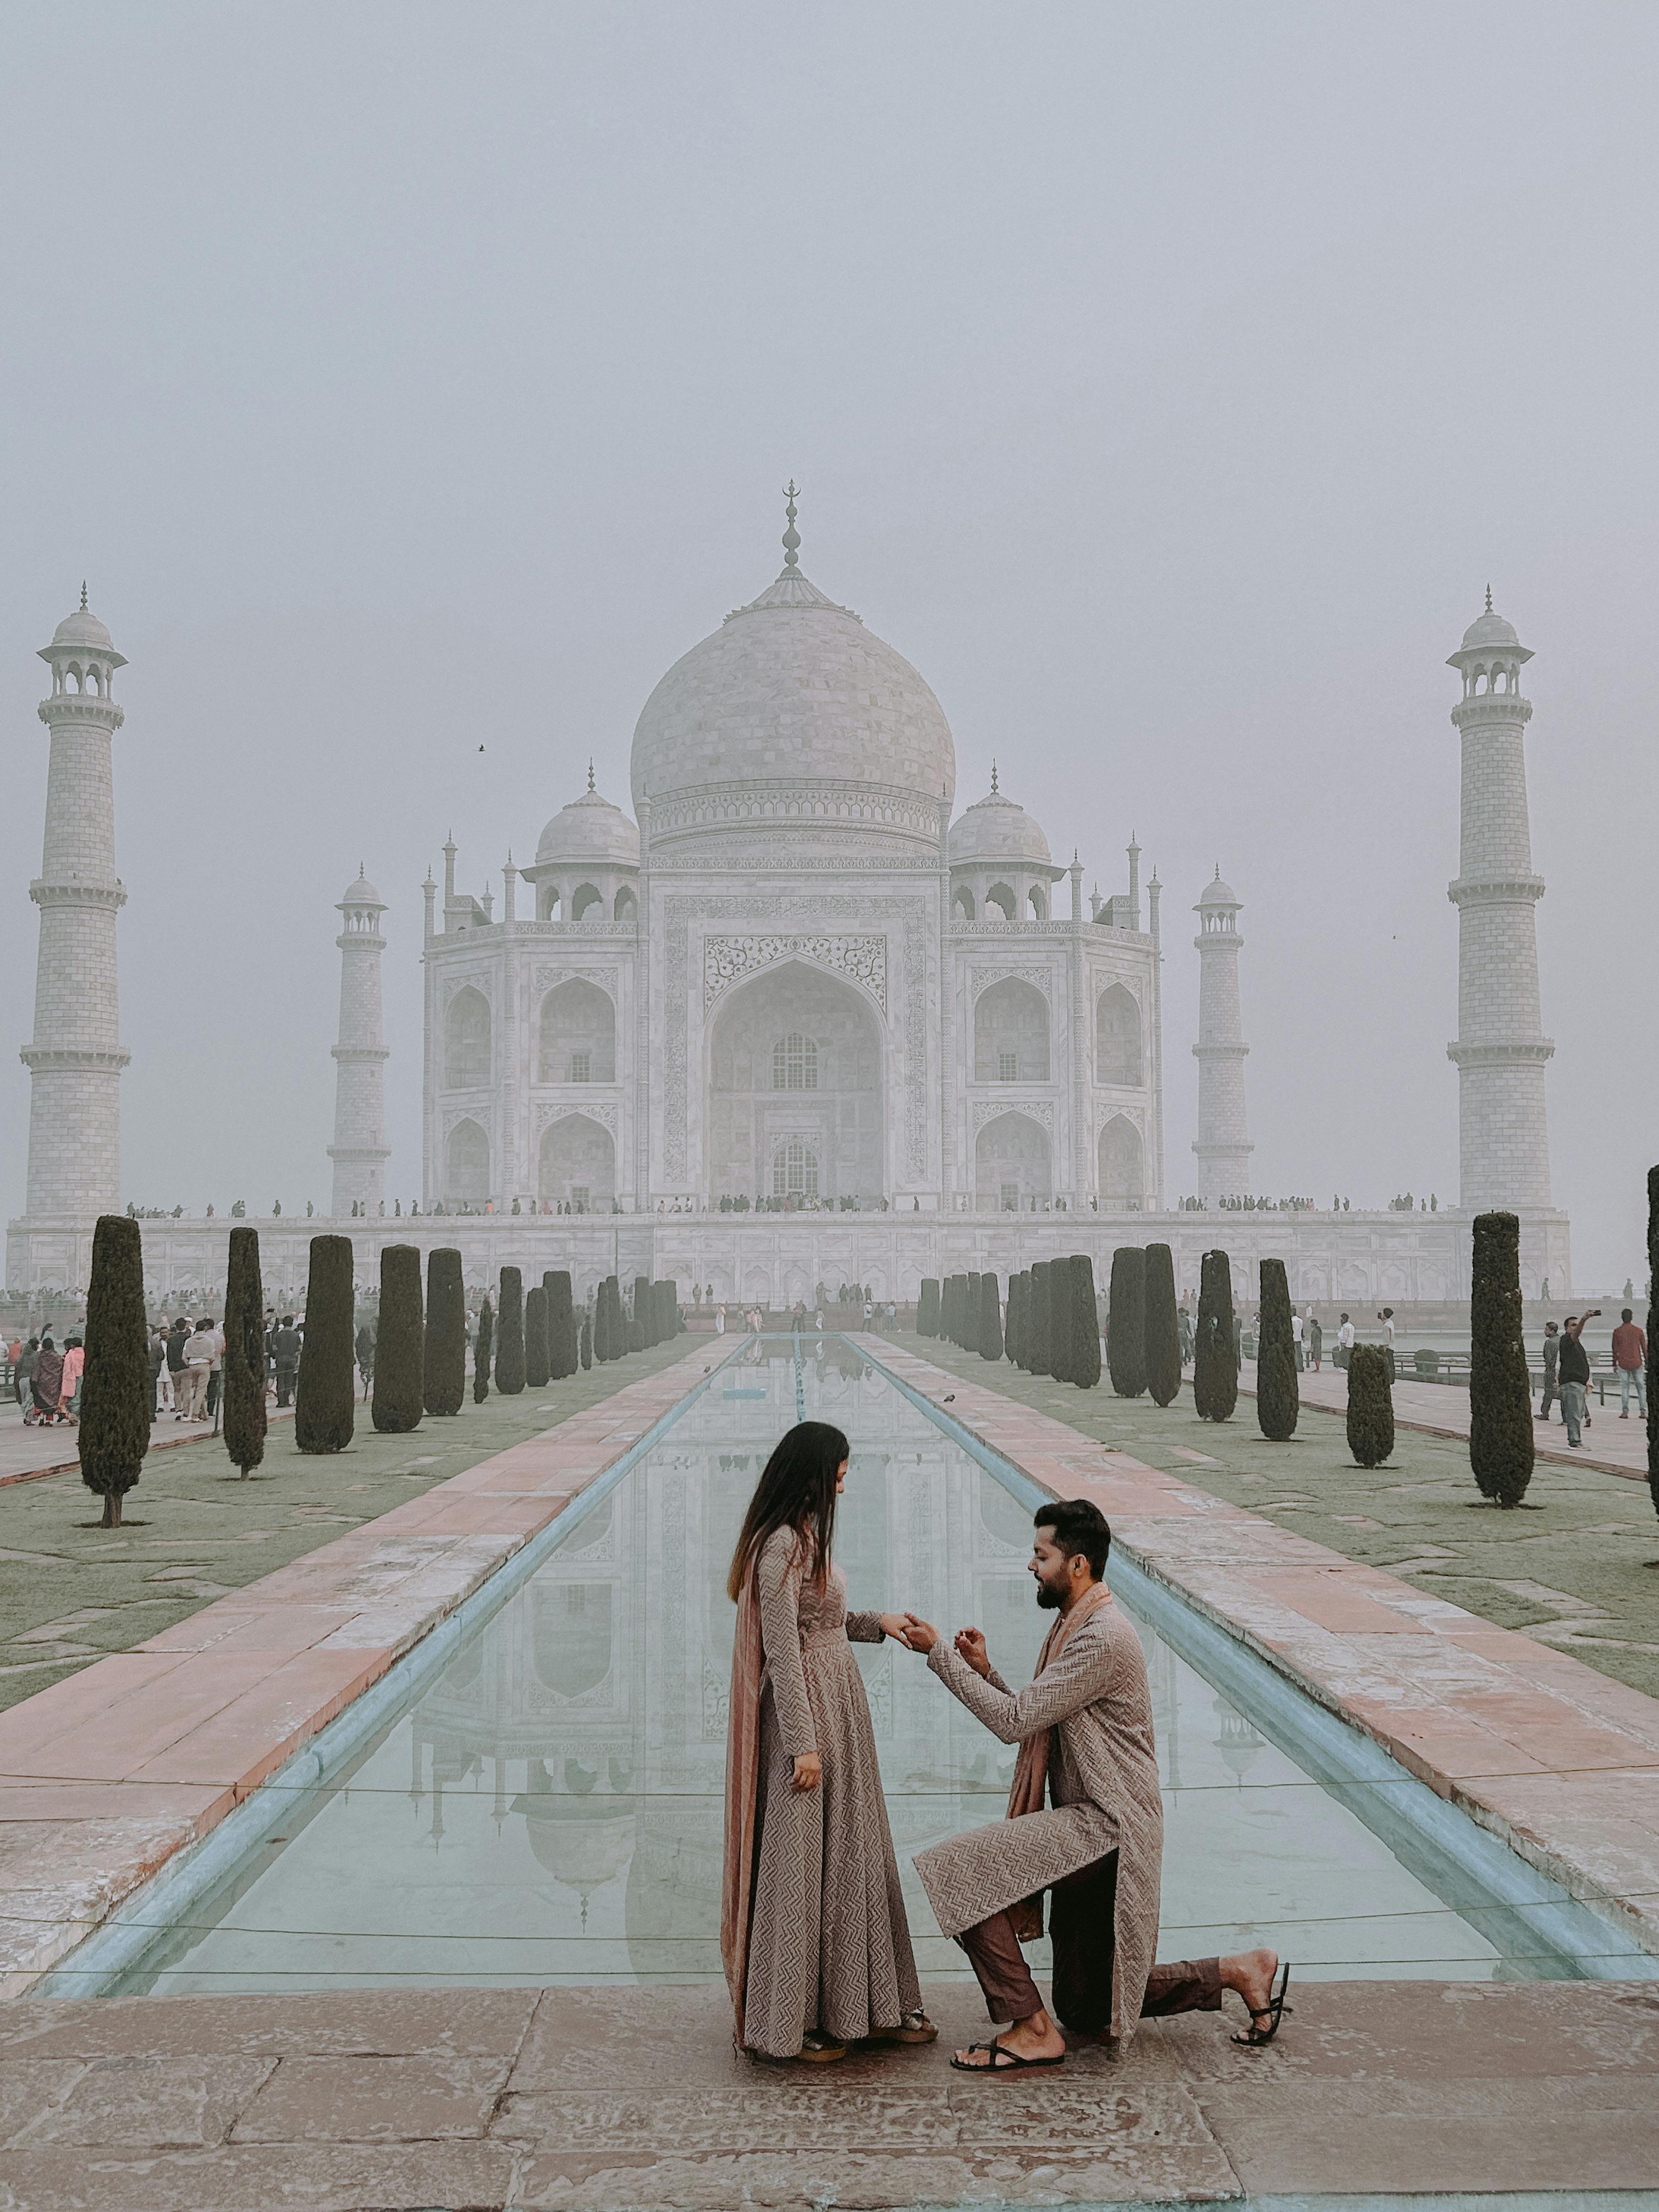 My Ultimate Travel Guide to Taj Mahal, India